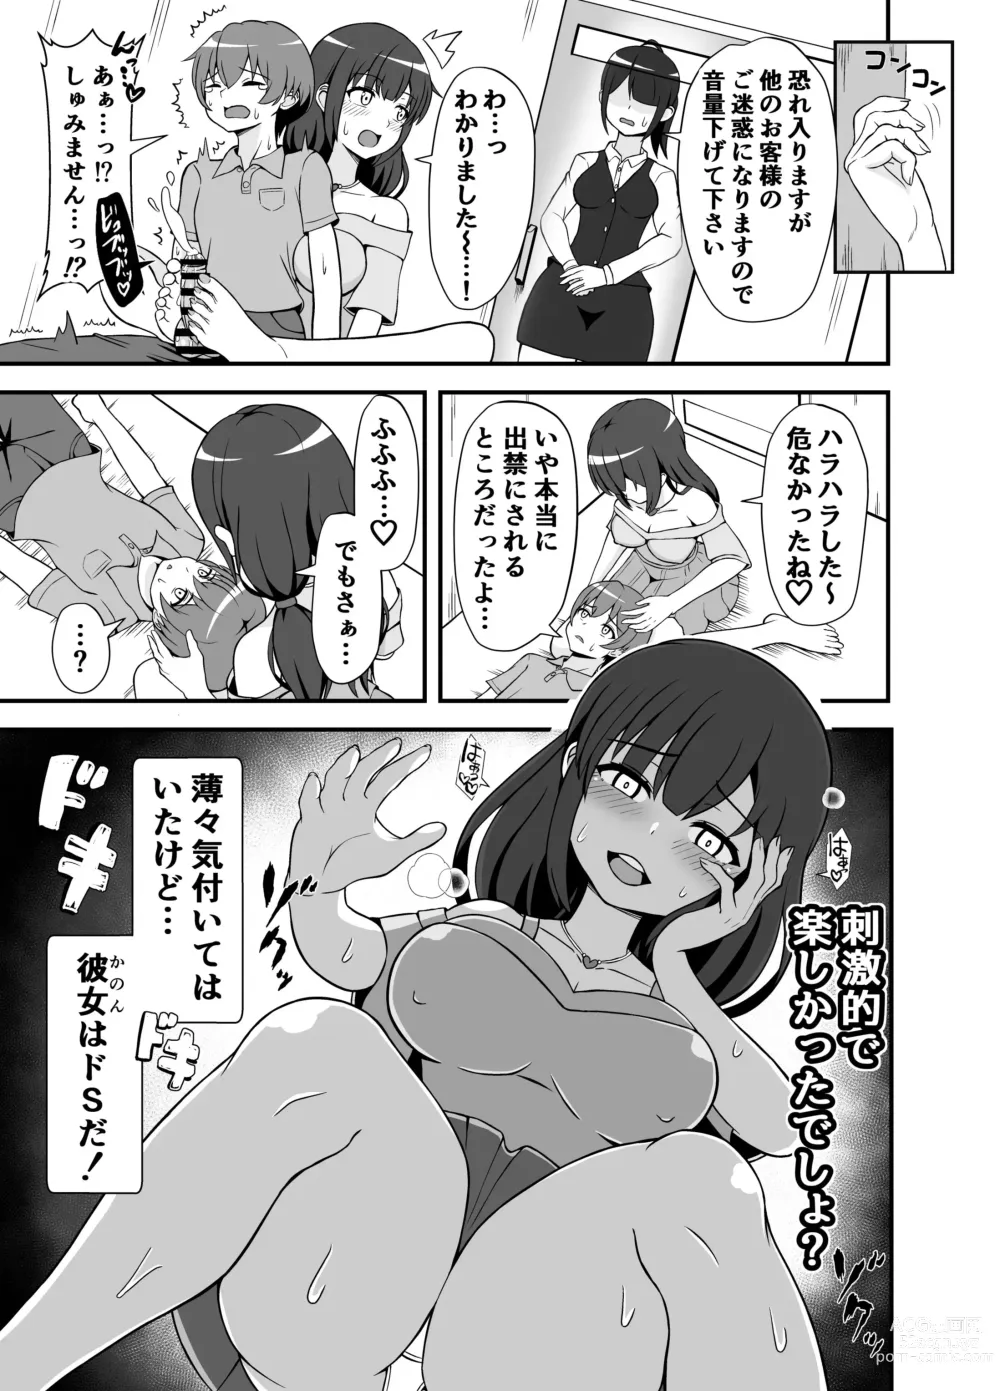 Page 14 of doujinshi 罰ゲームで告白した陰キャ彼女がドSだった件